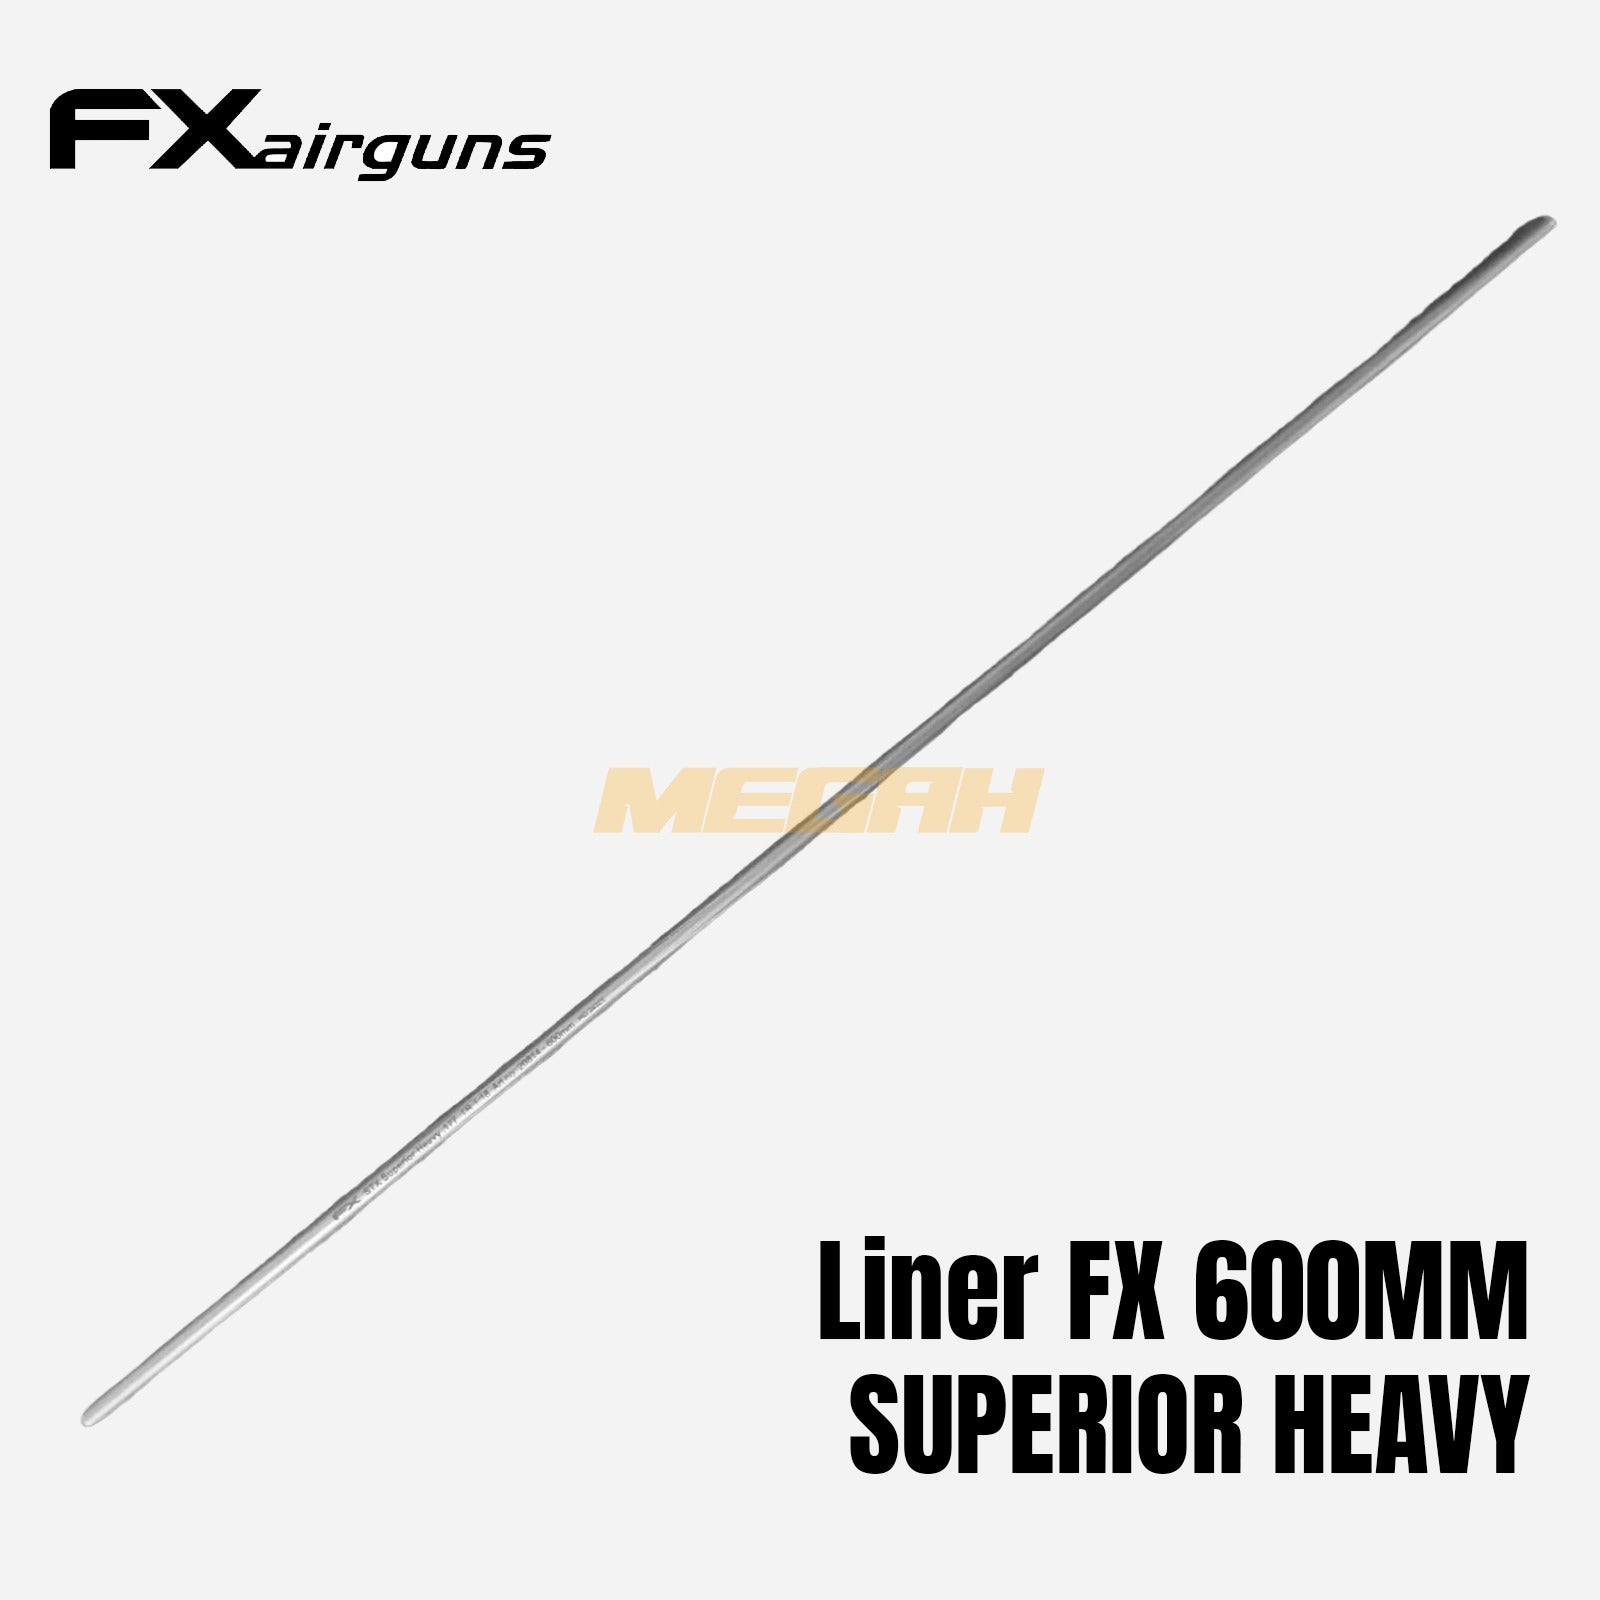 LINER FX 600mm SUPERIOR HEAVY